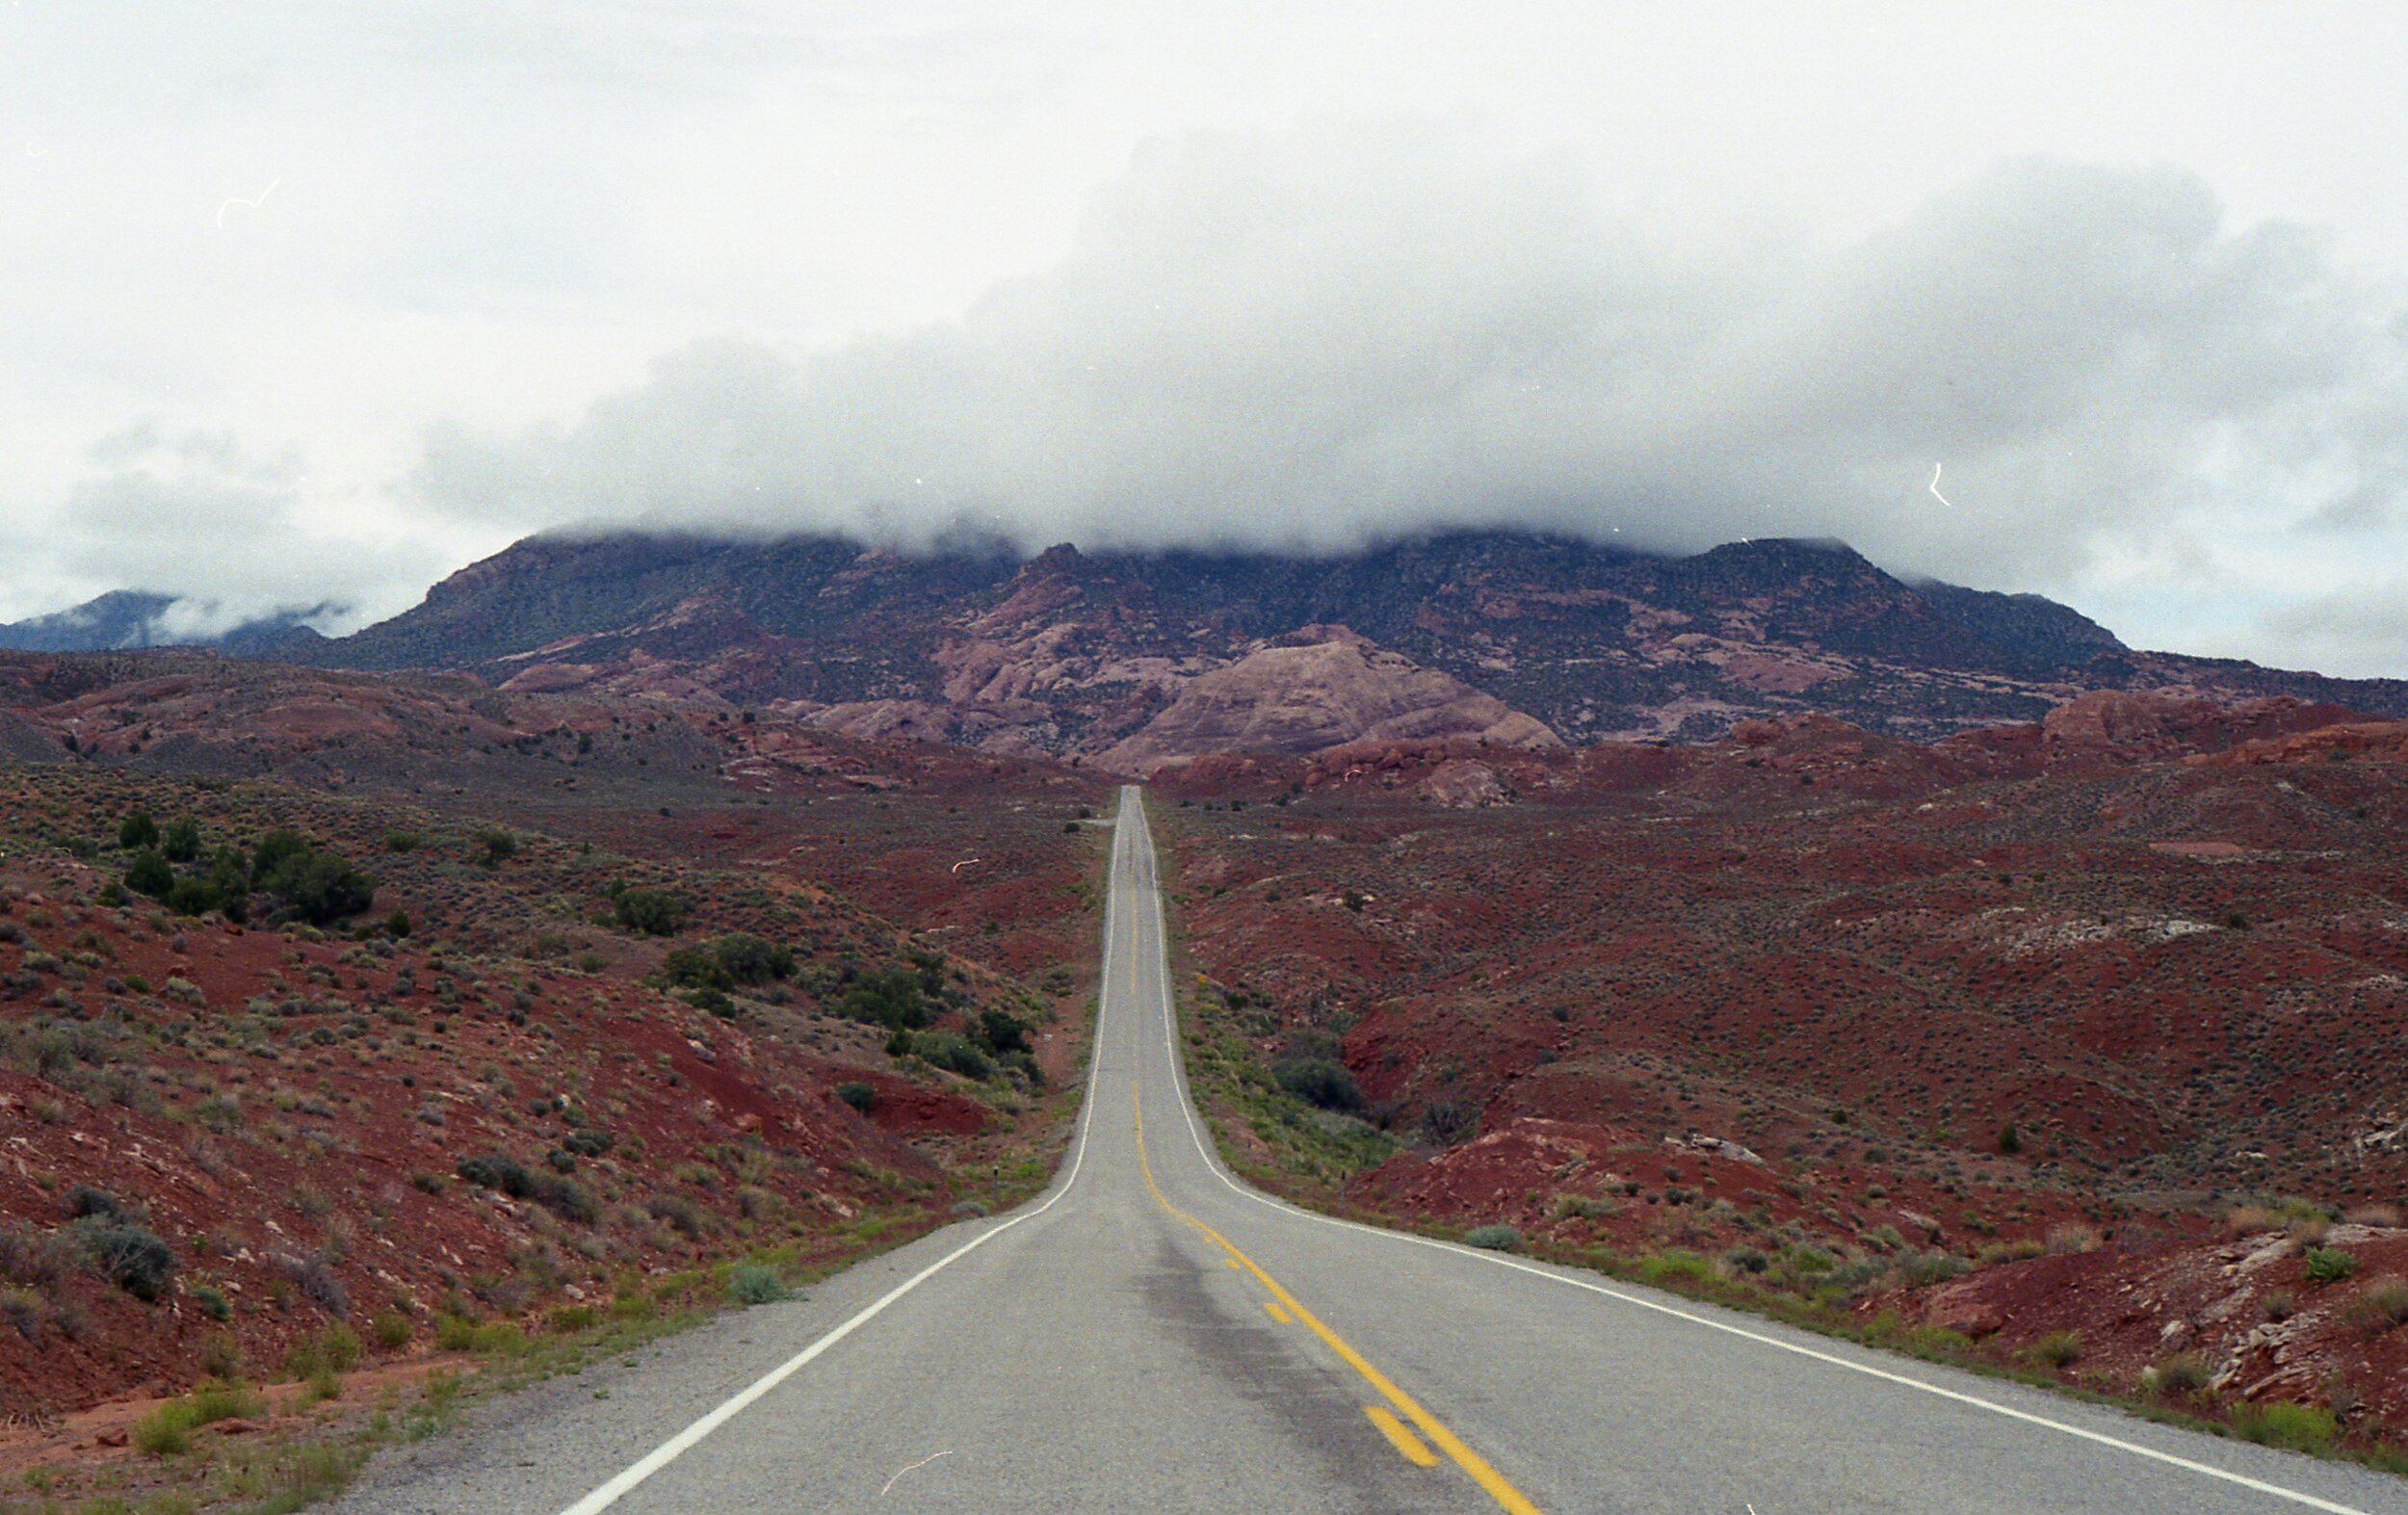  Digital scan of color film: Country roads in Utah, 2019 